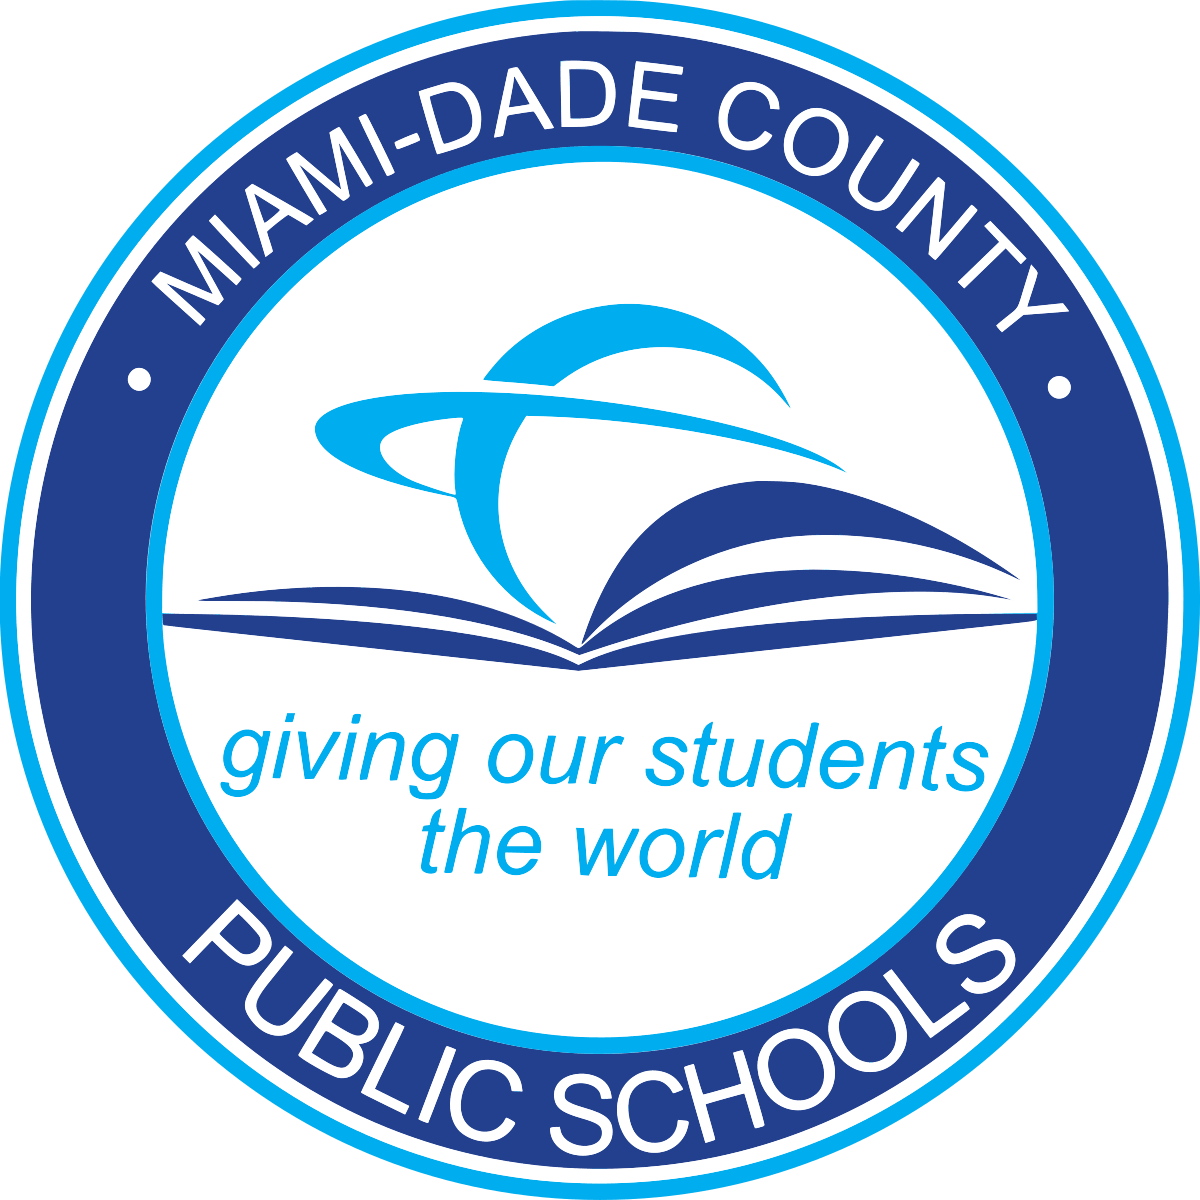 Miami-Dade County School Board logo